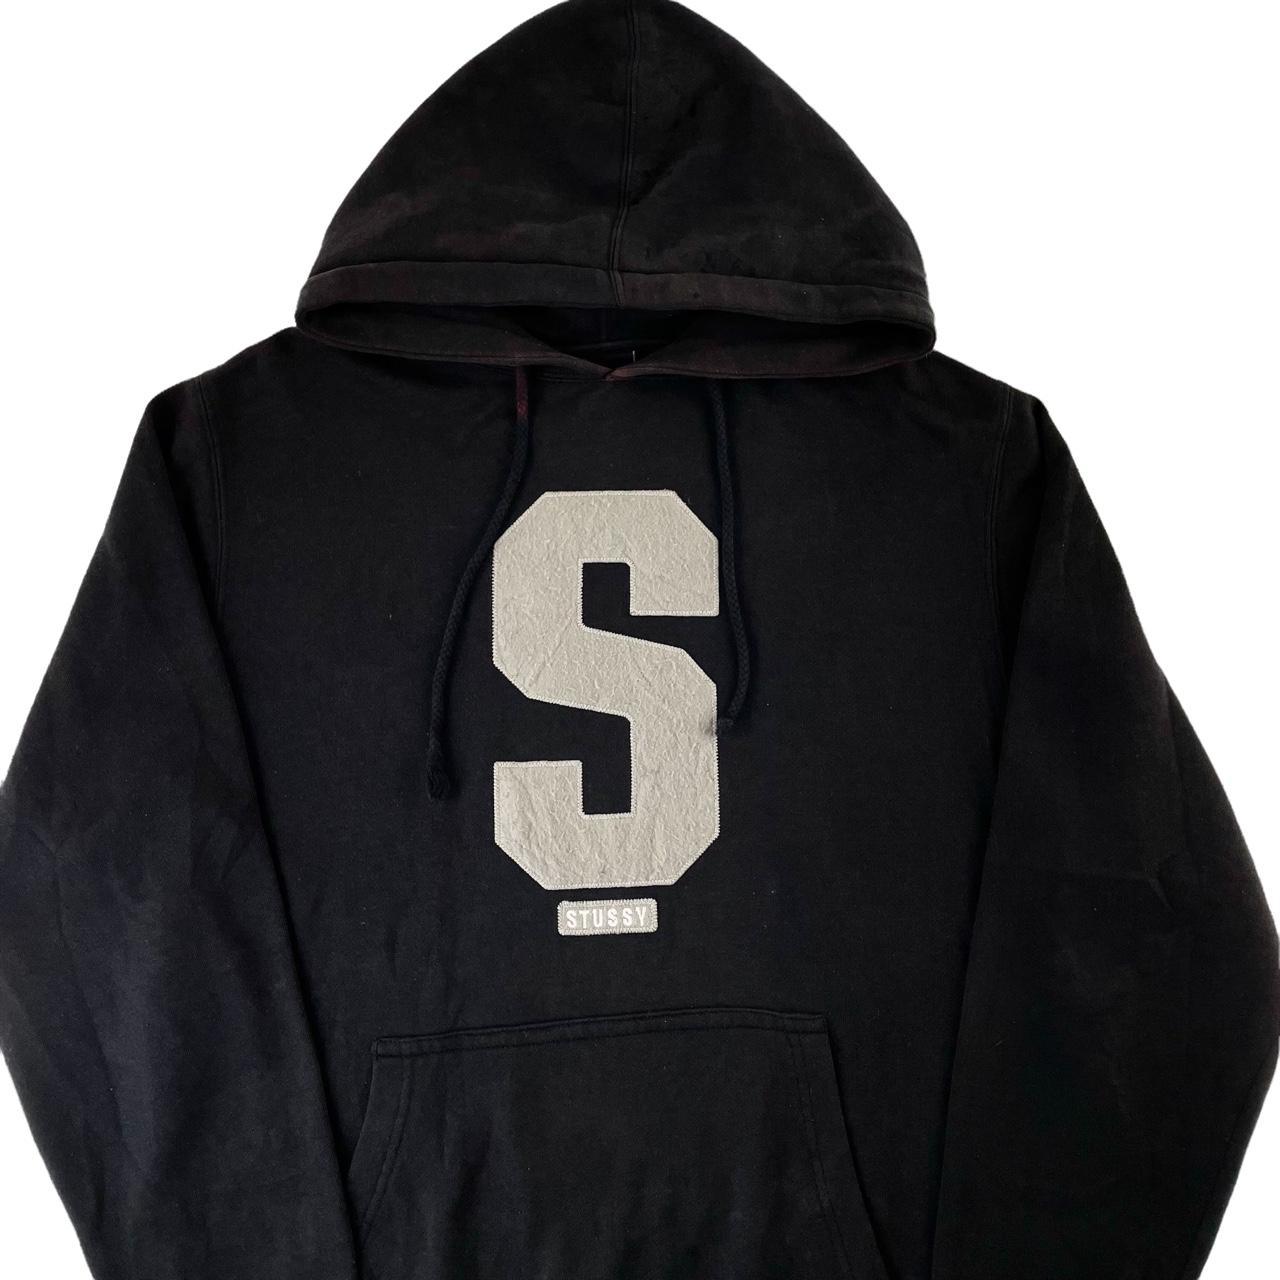 Stussy S logo hoodie size M Measurements 22” pit... - Depop